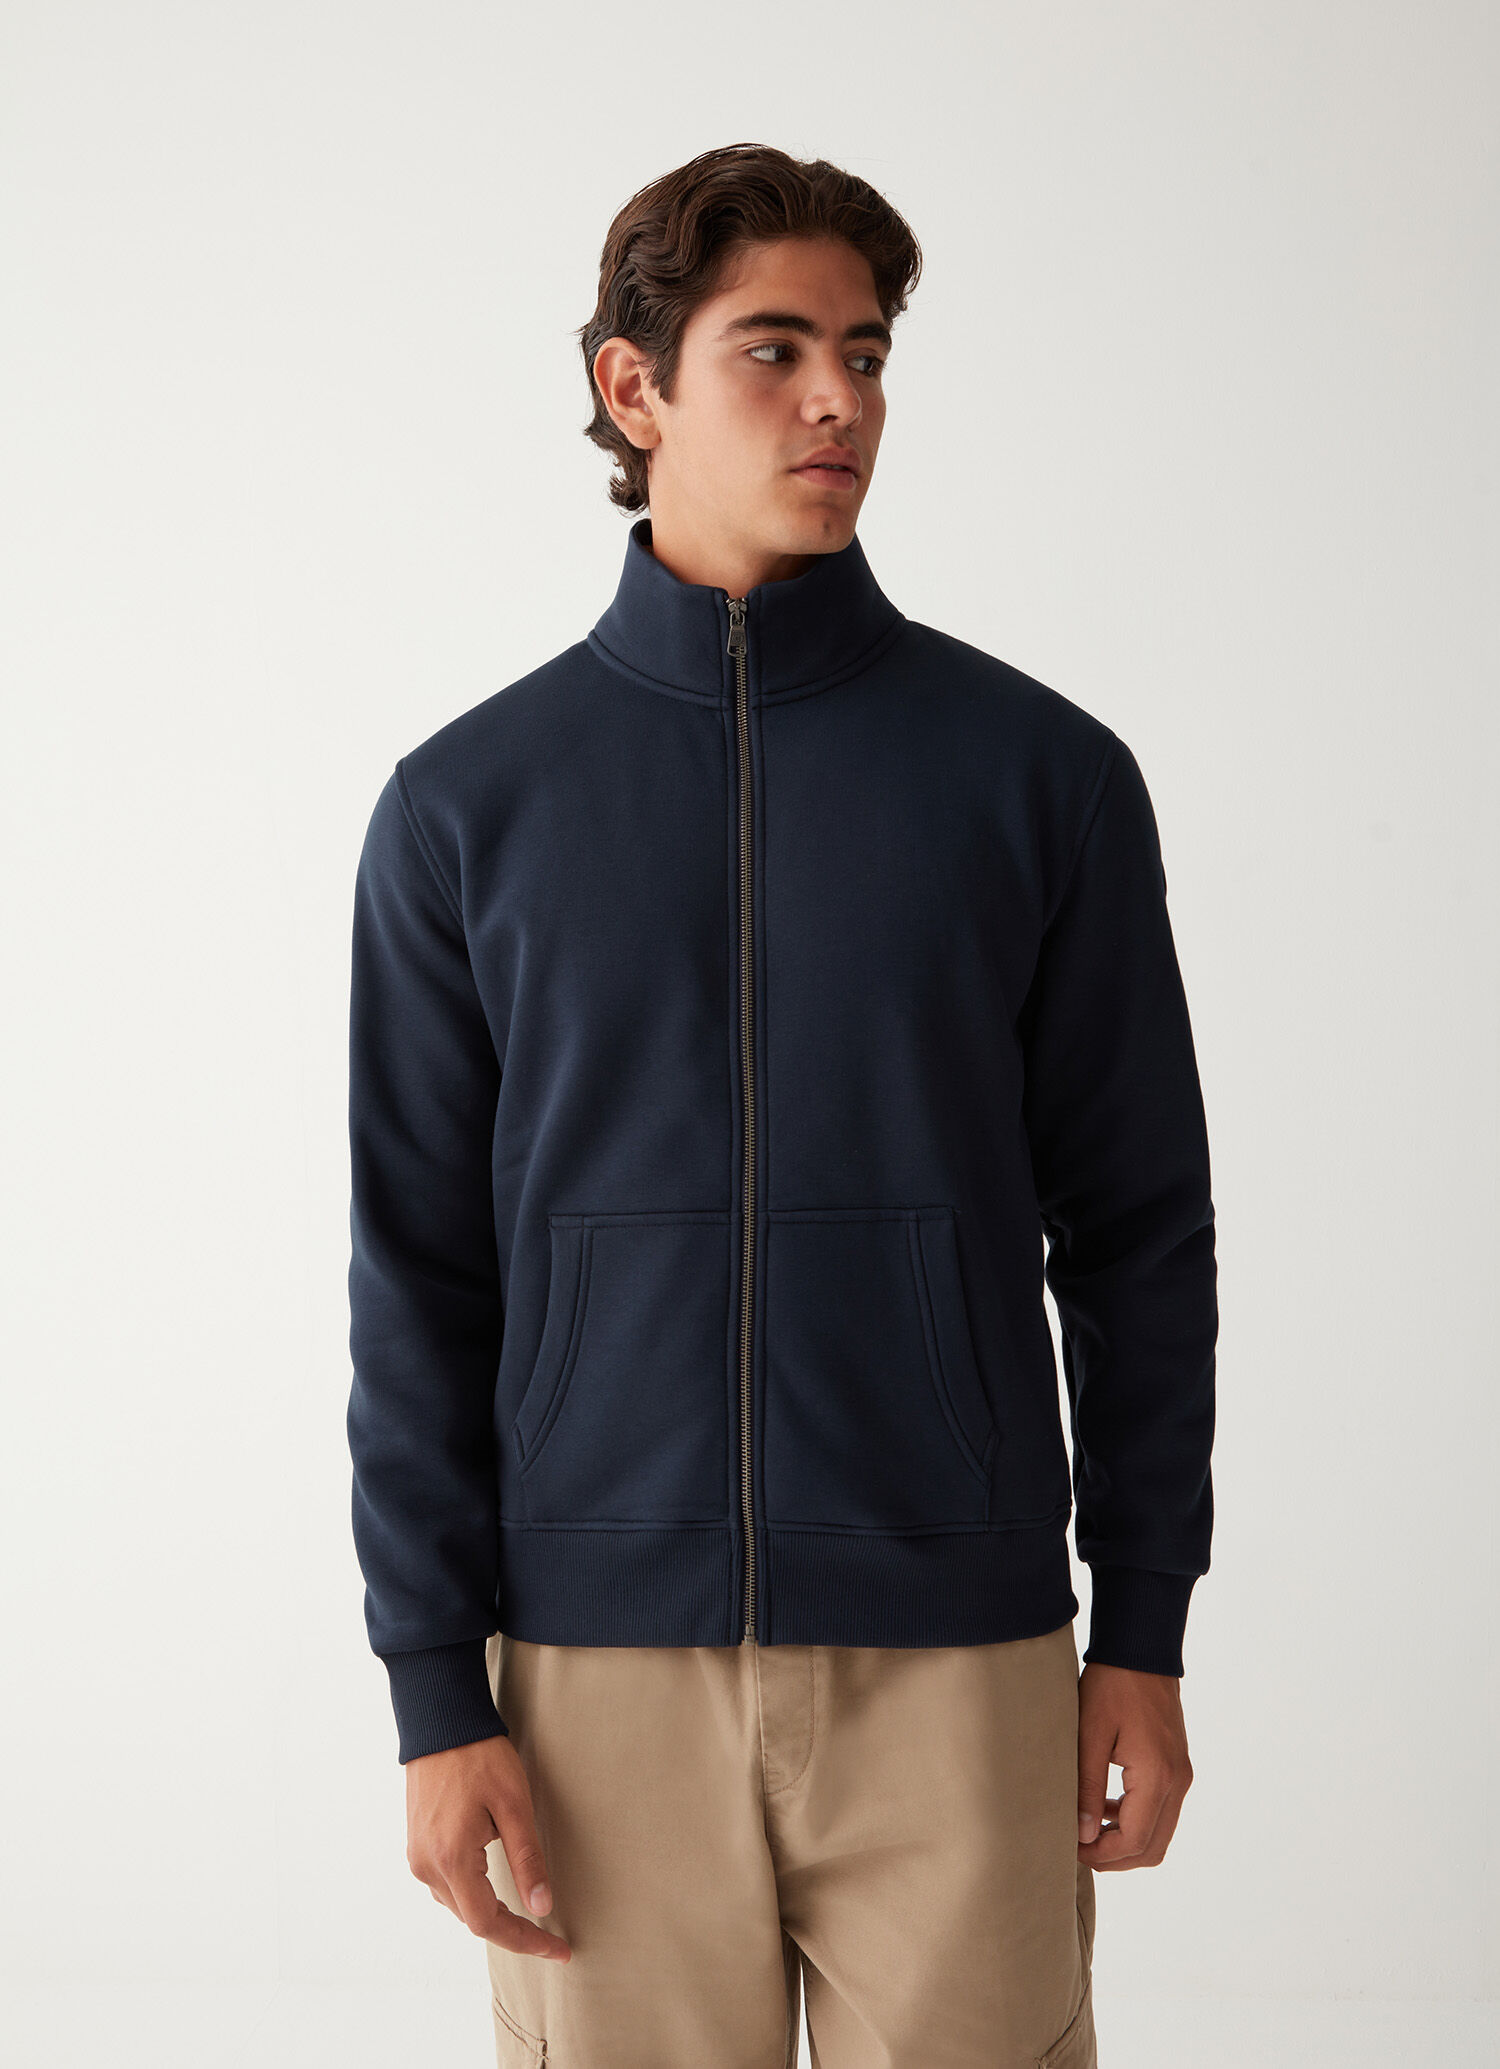 Grau L Rabatt 88 % HERREN Pullovers & Sweatshirts Mit Reißverschluss Primark Pullover 